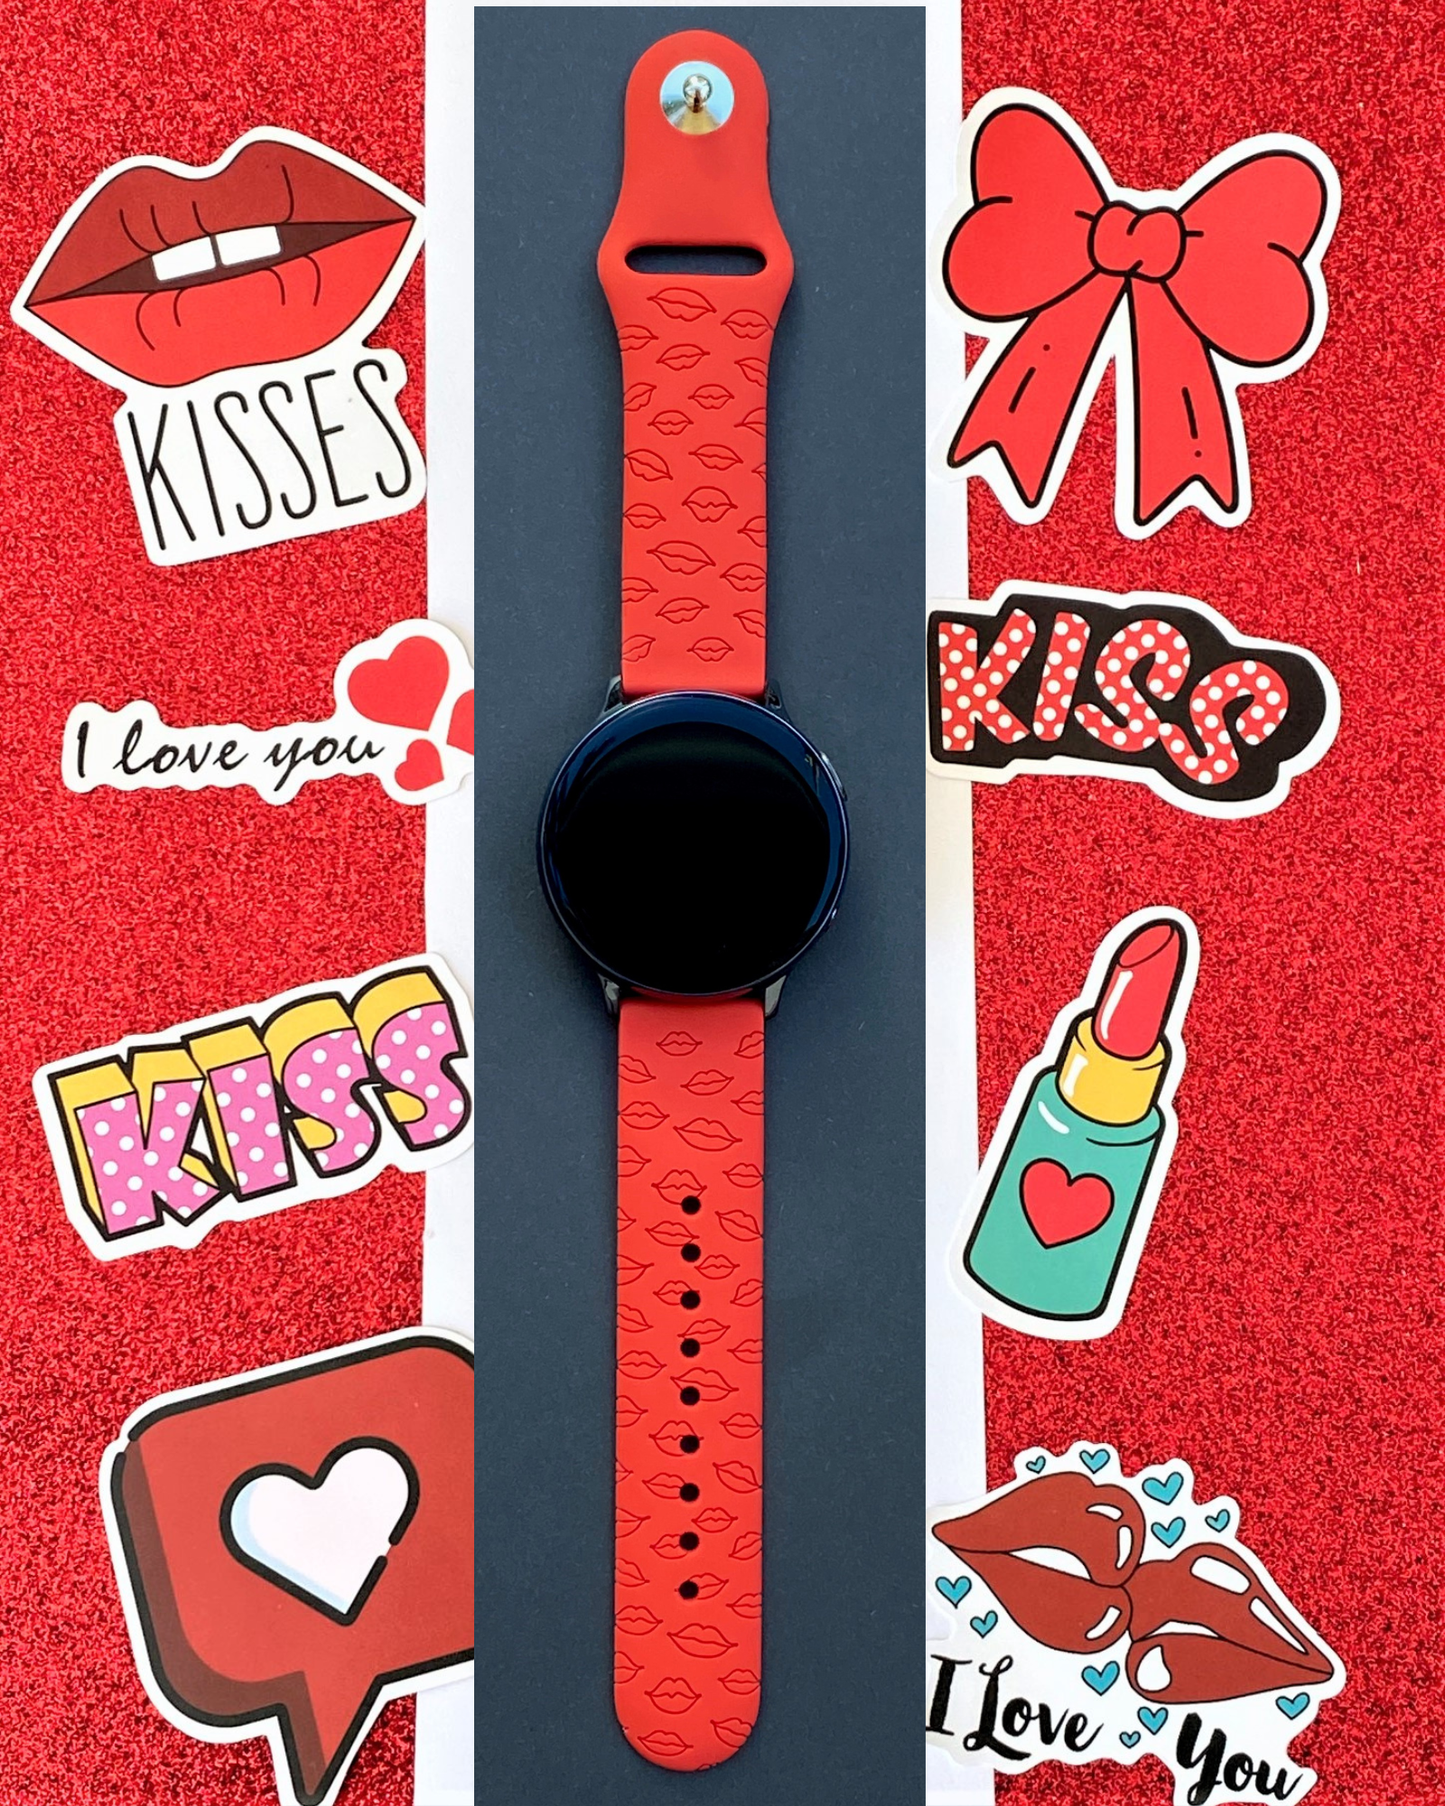 Kisses Valentine's Day 20mm Samsung Galaxy Watch Band